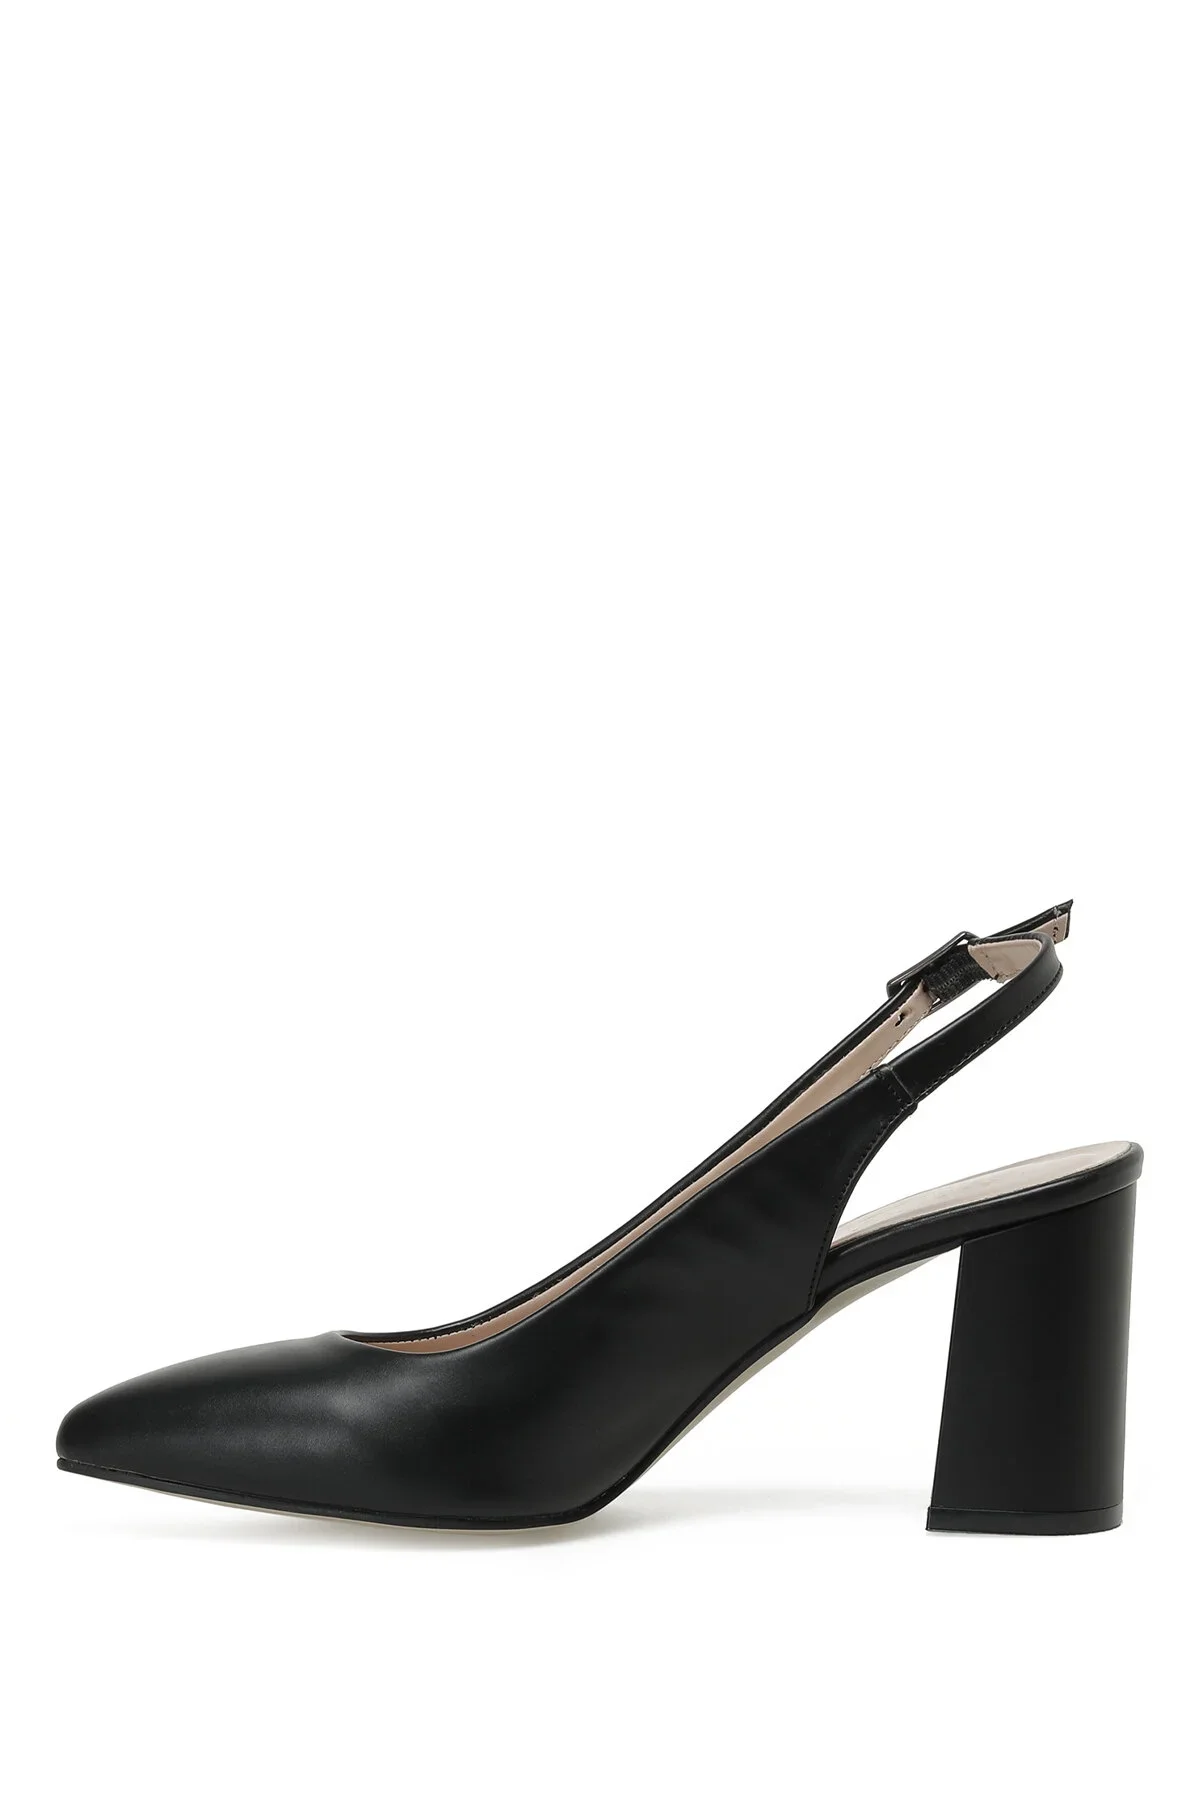 TESSA 3FX Kadın Topuklu Ayakkabı-Siyah - 3